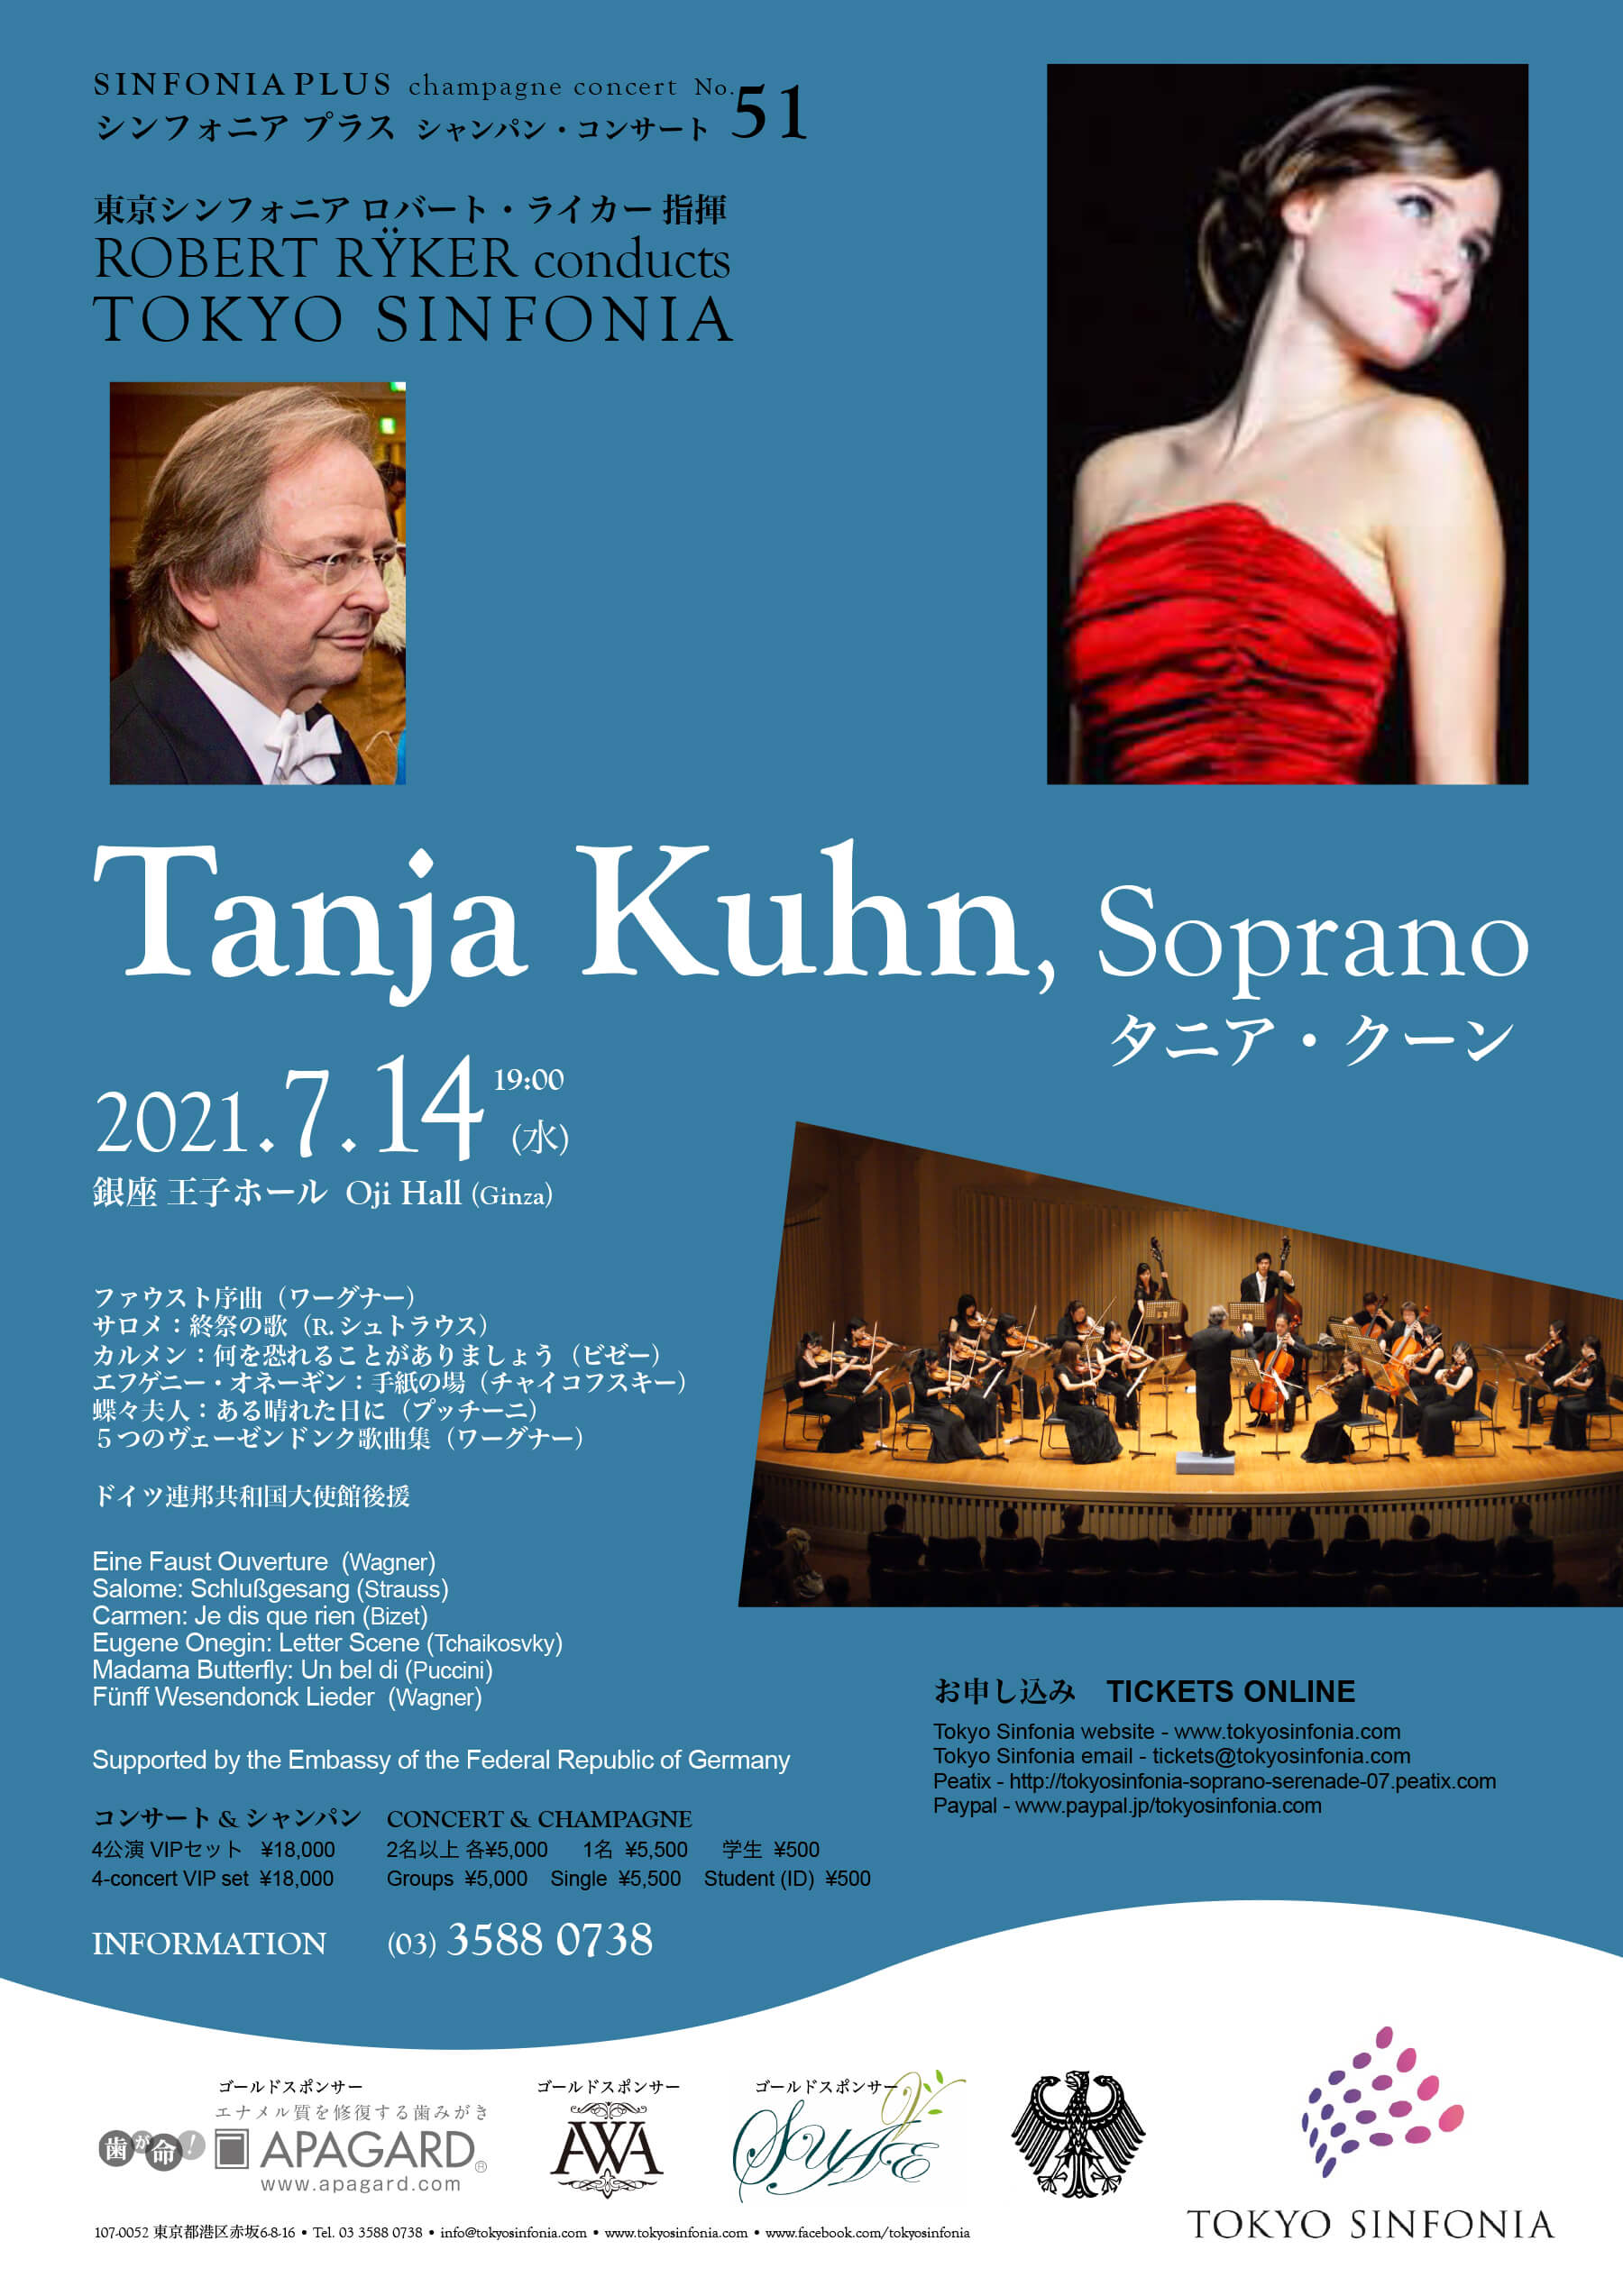 【Programme Changed】7/14 Tanja Kuhn Soprano Serenade